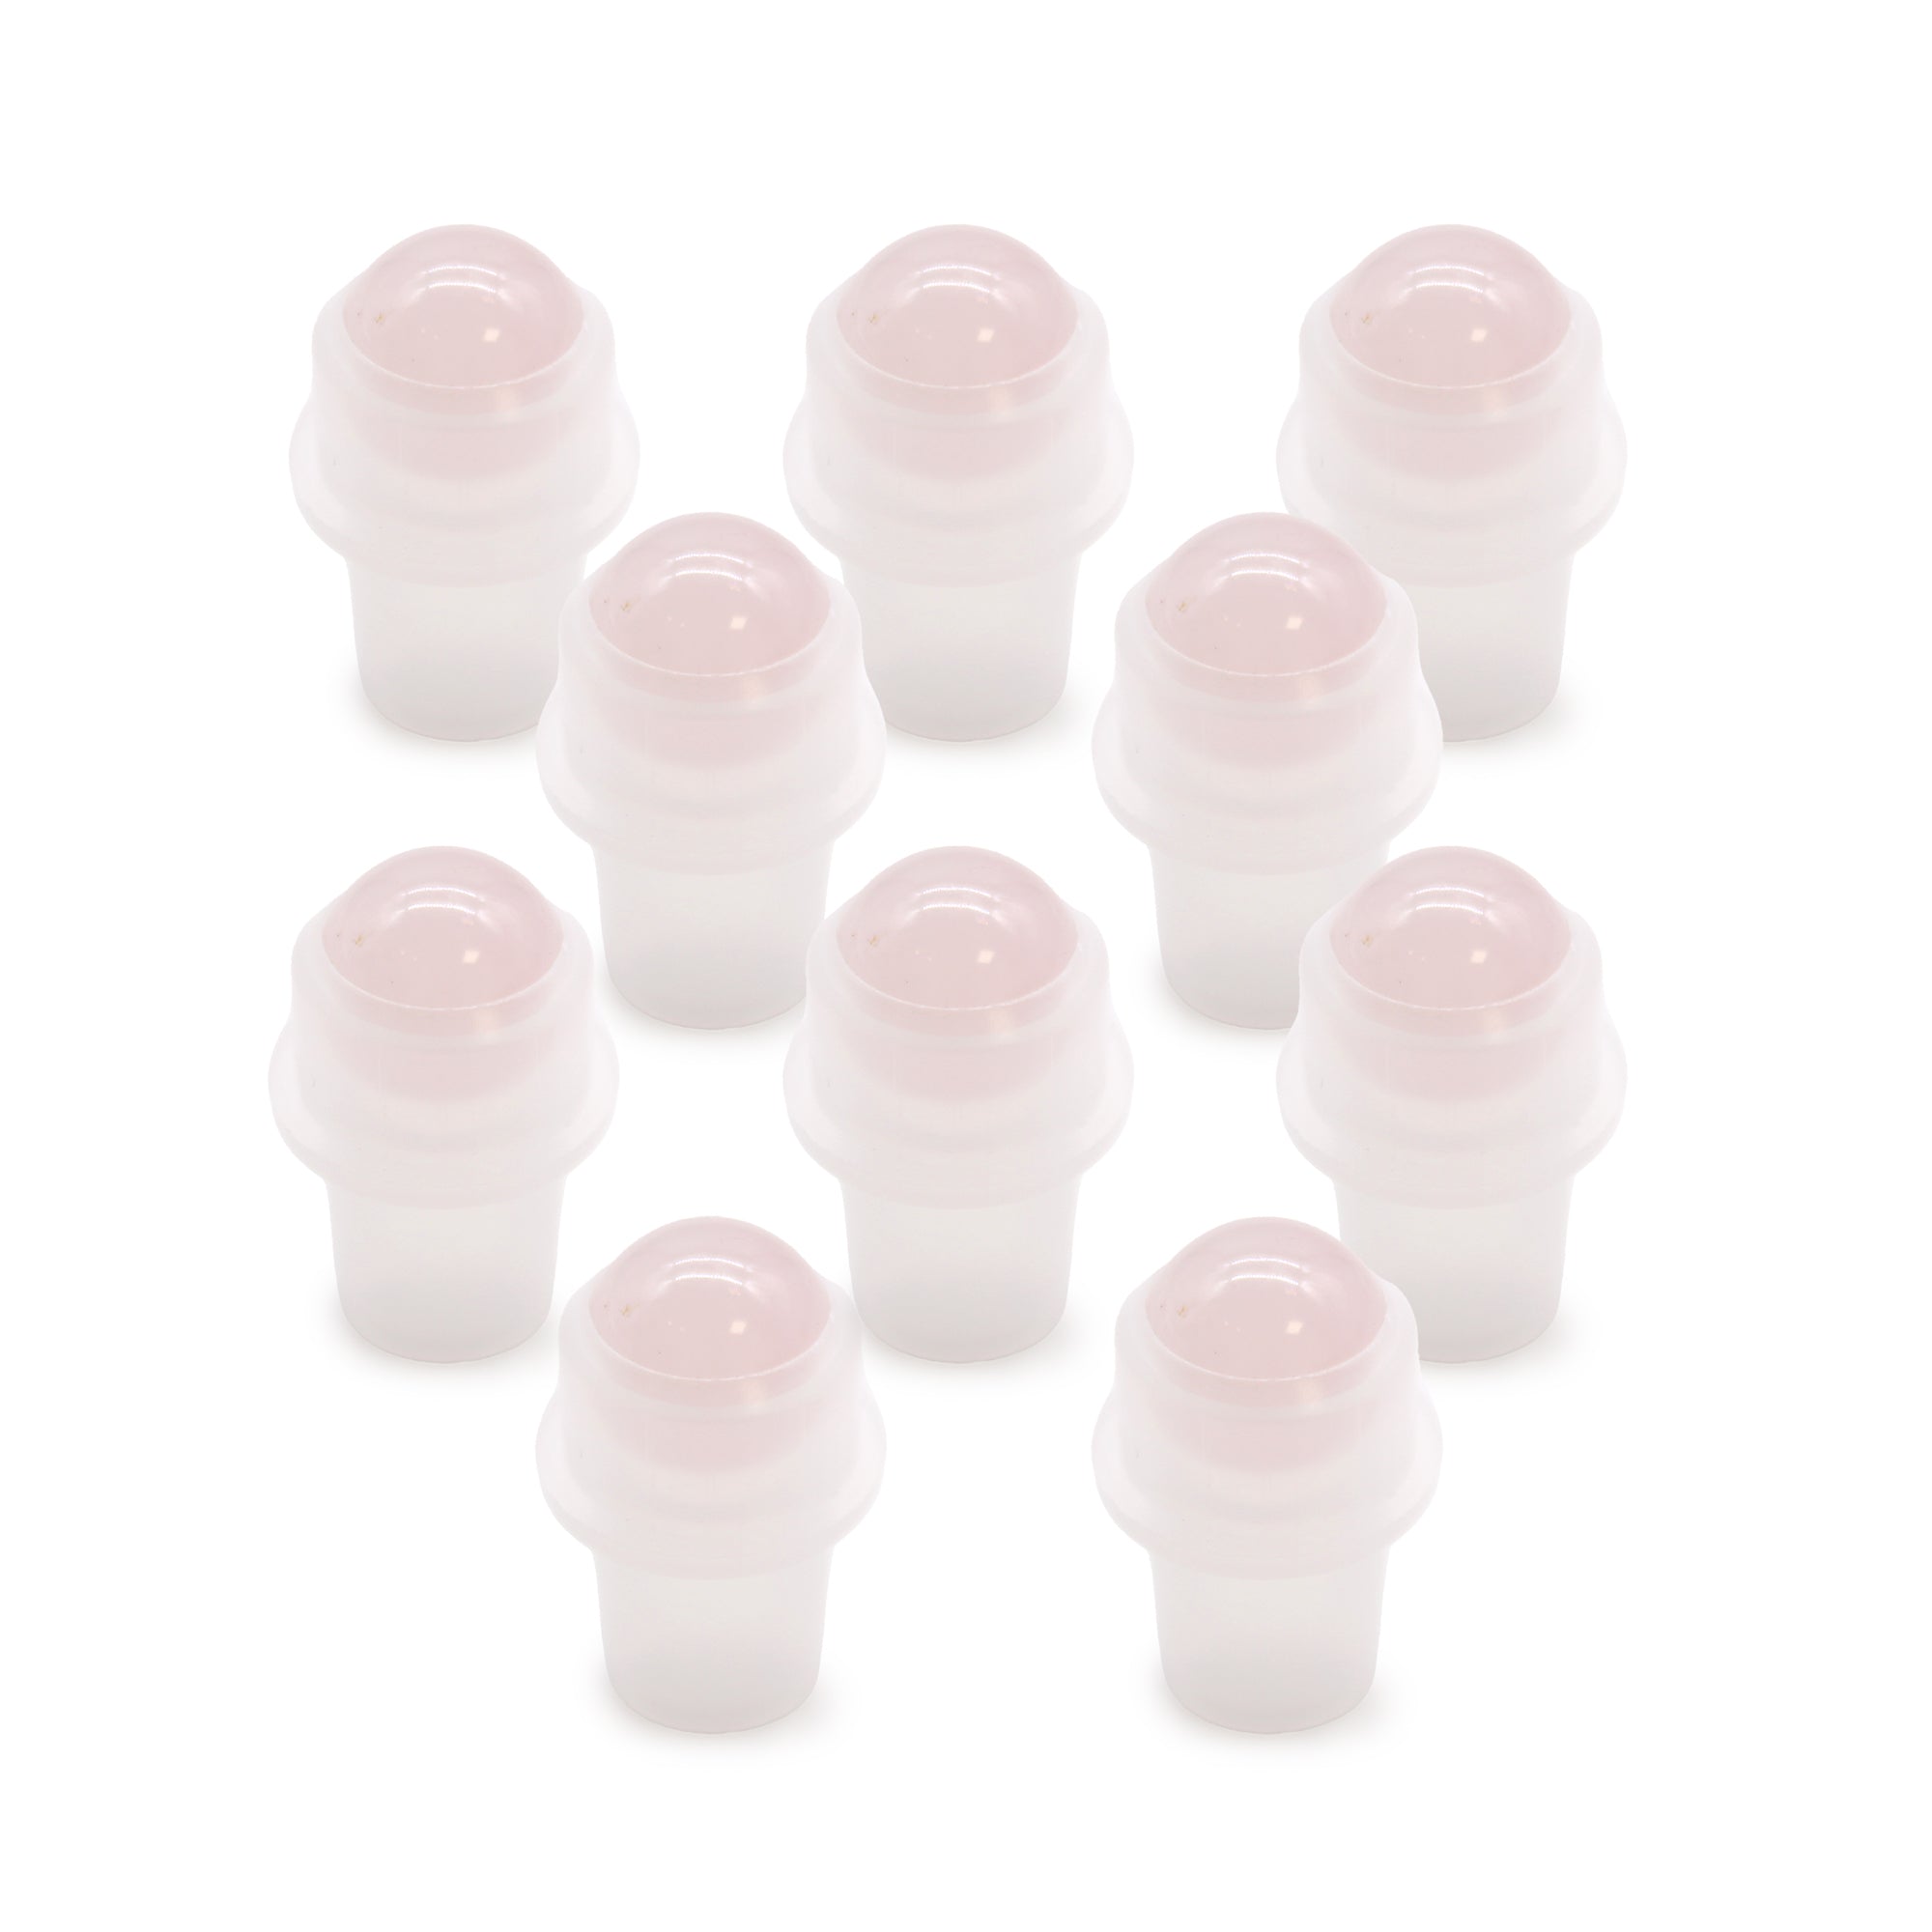 View Gemstone Roller Tip for 5ml Bottle Rose Quartz information